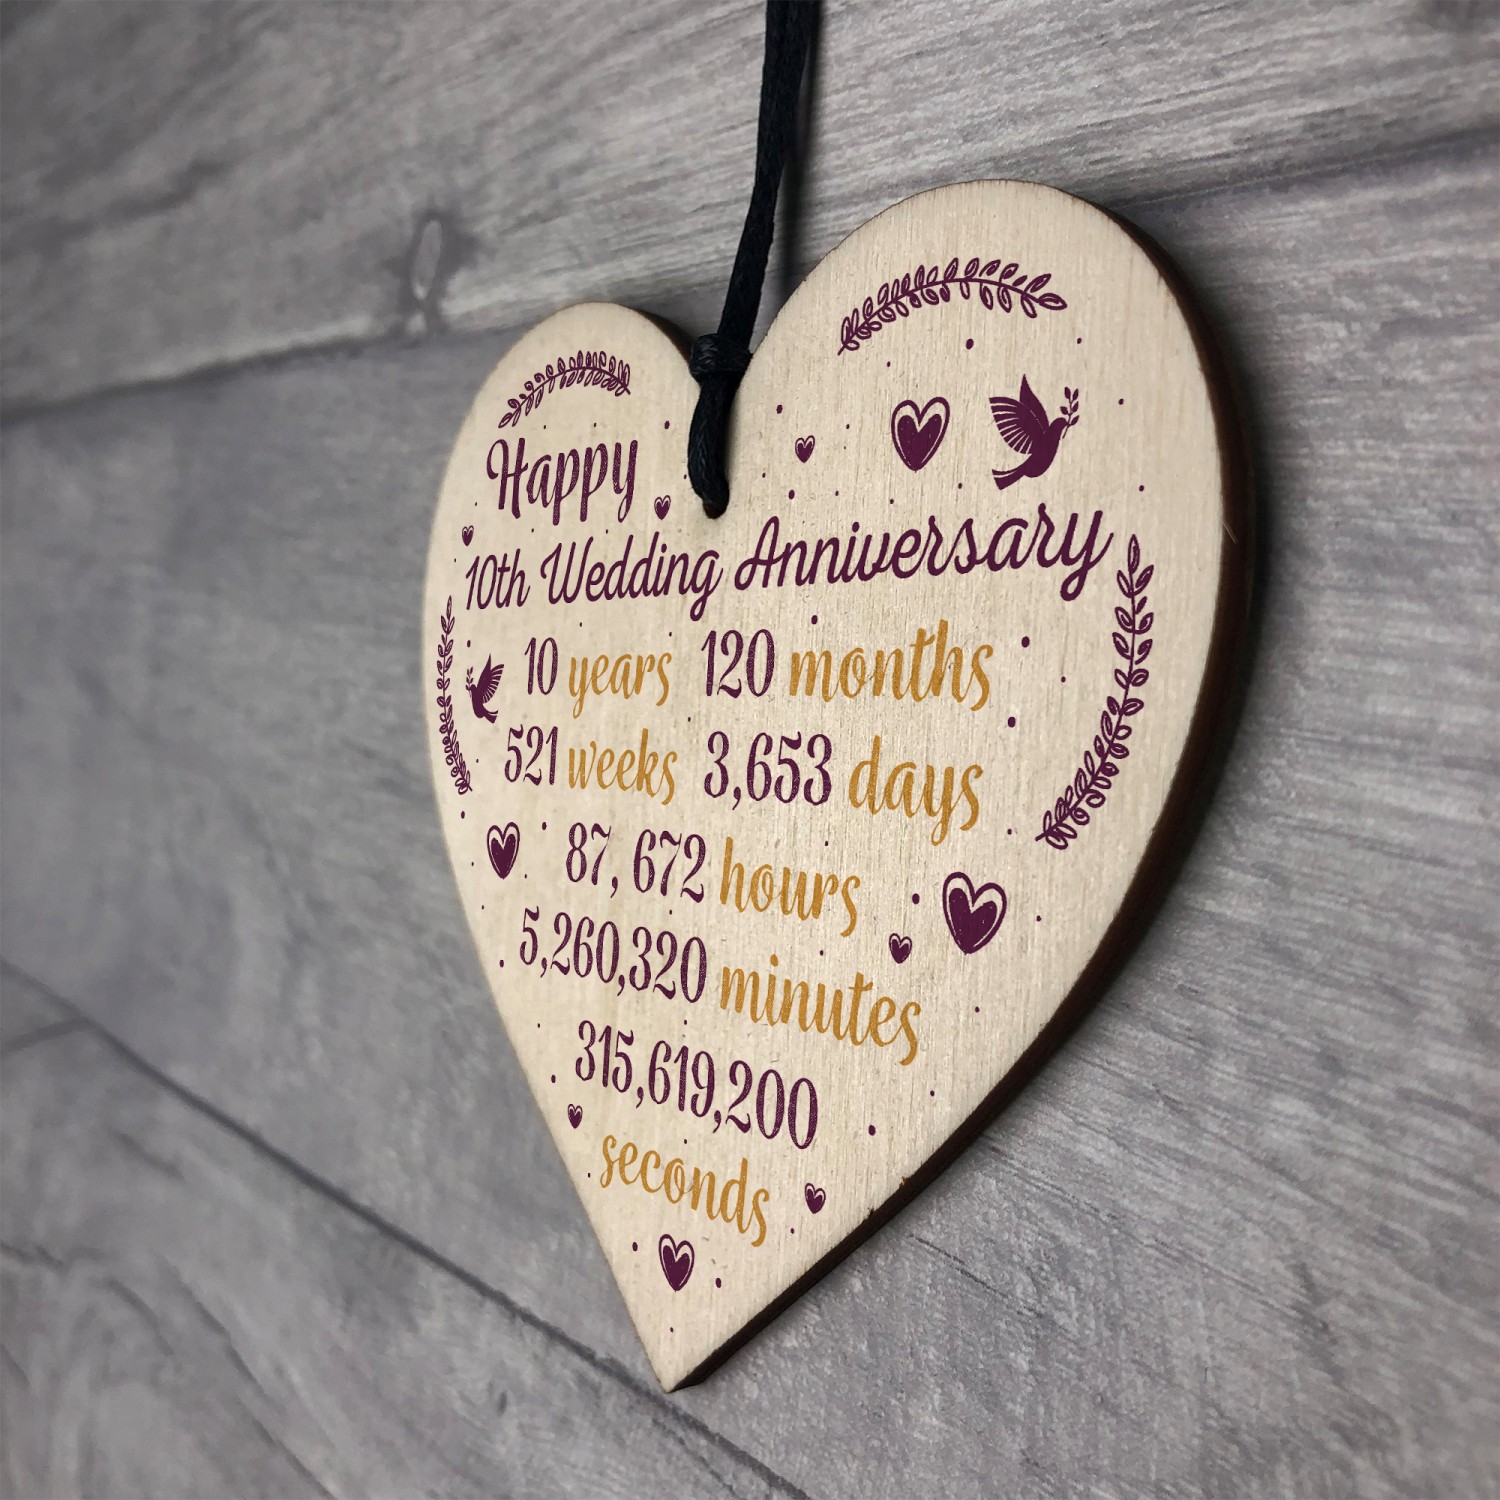 Wedding Anniversary Gifts For Her
 Handmade Wood Heart Plaque 10th Wedding Anniversary Gift